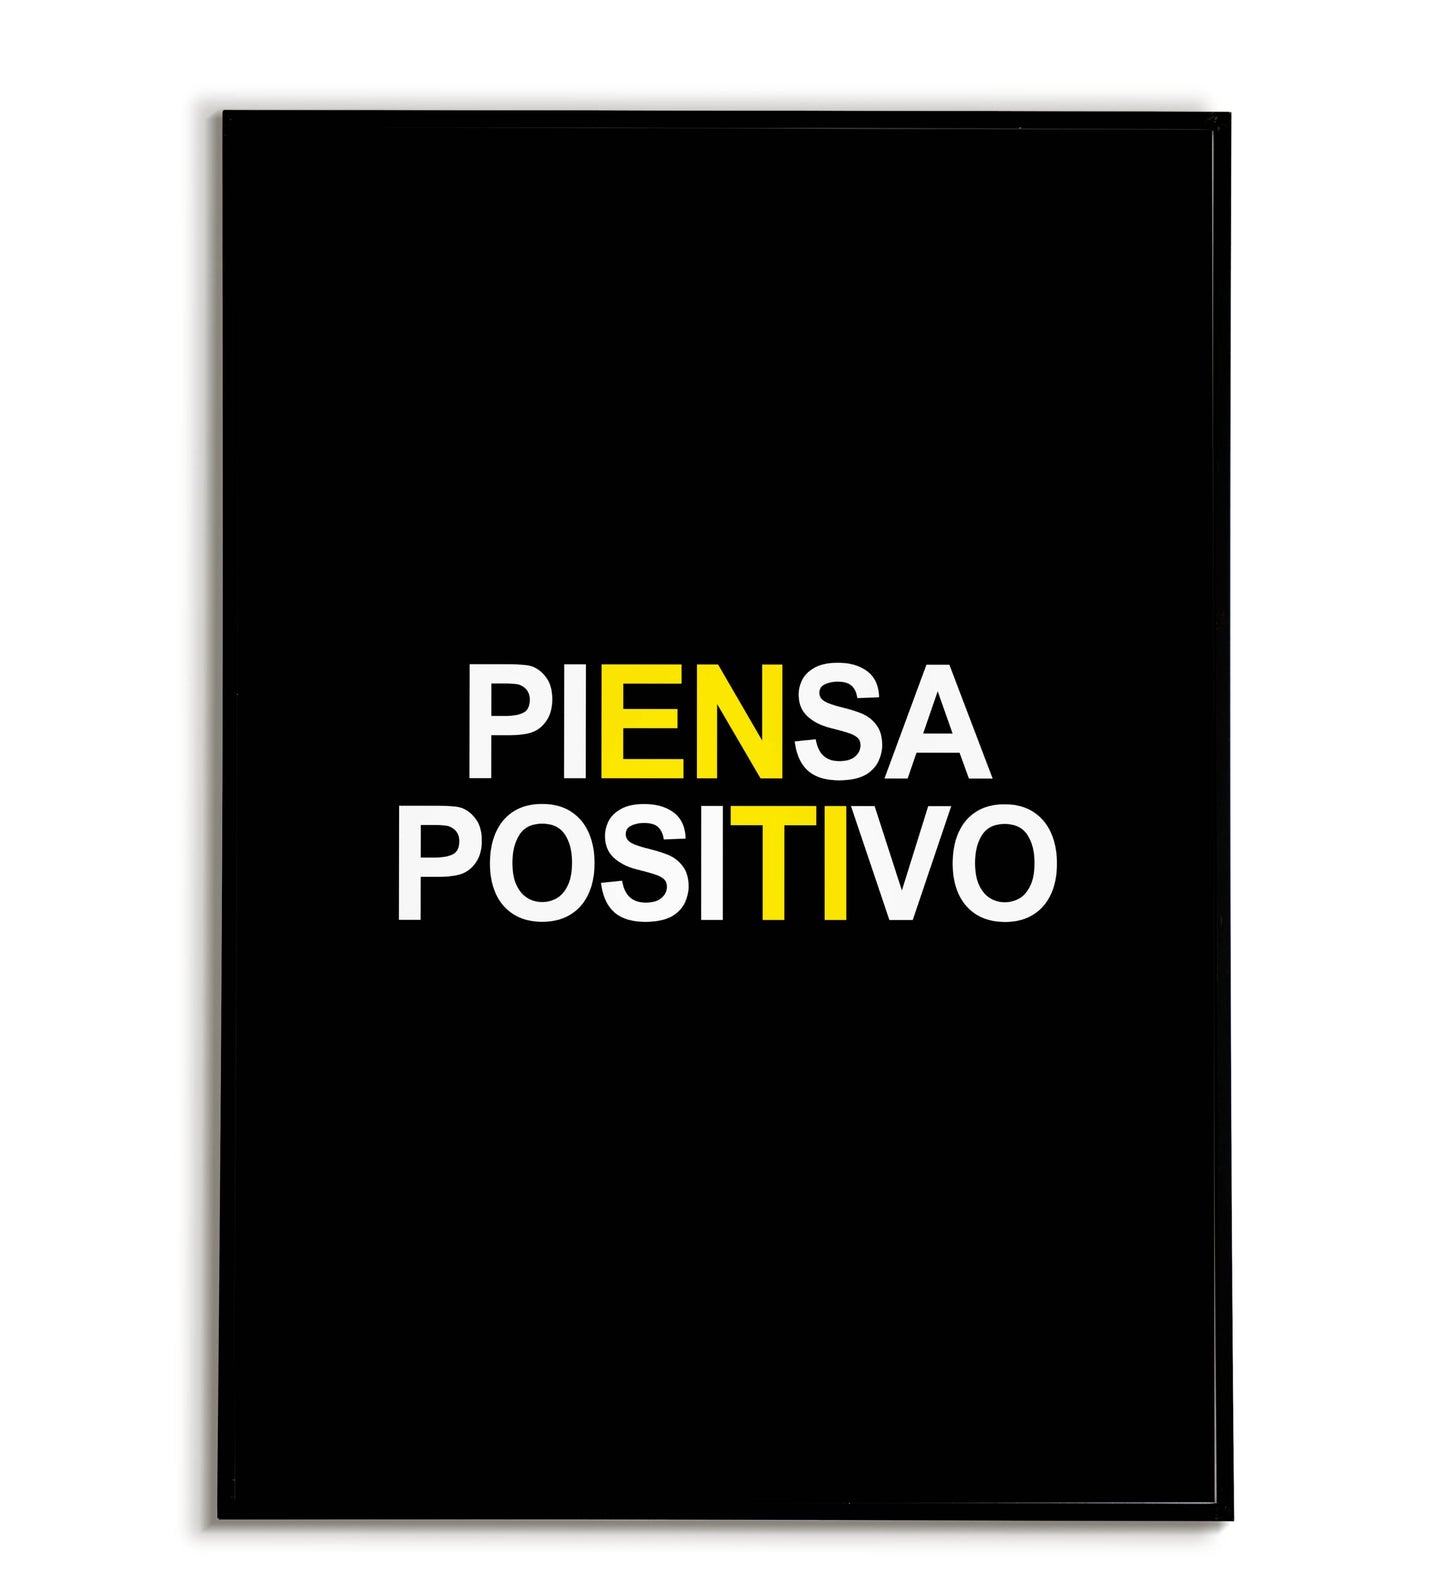 "Piensa positivo" printable inspirational poster in Spanish.